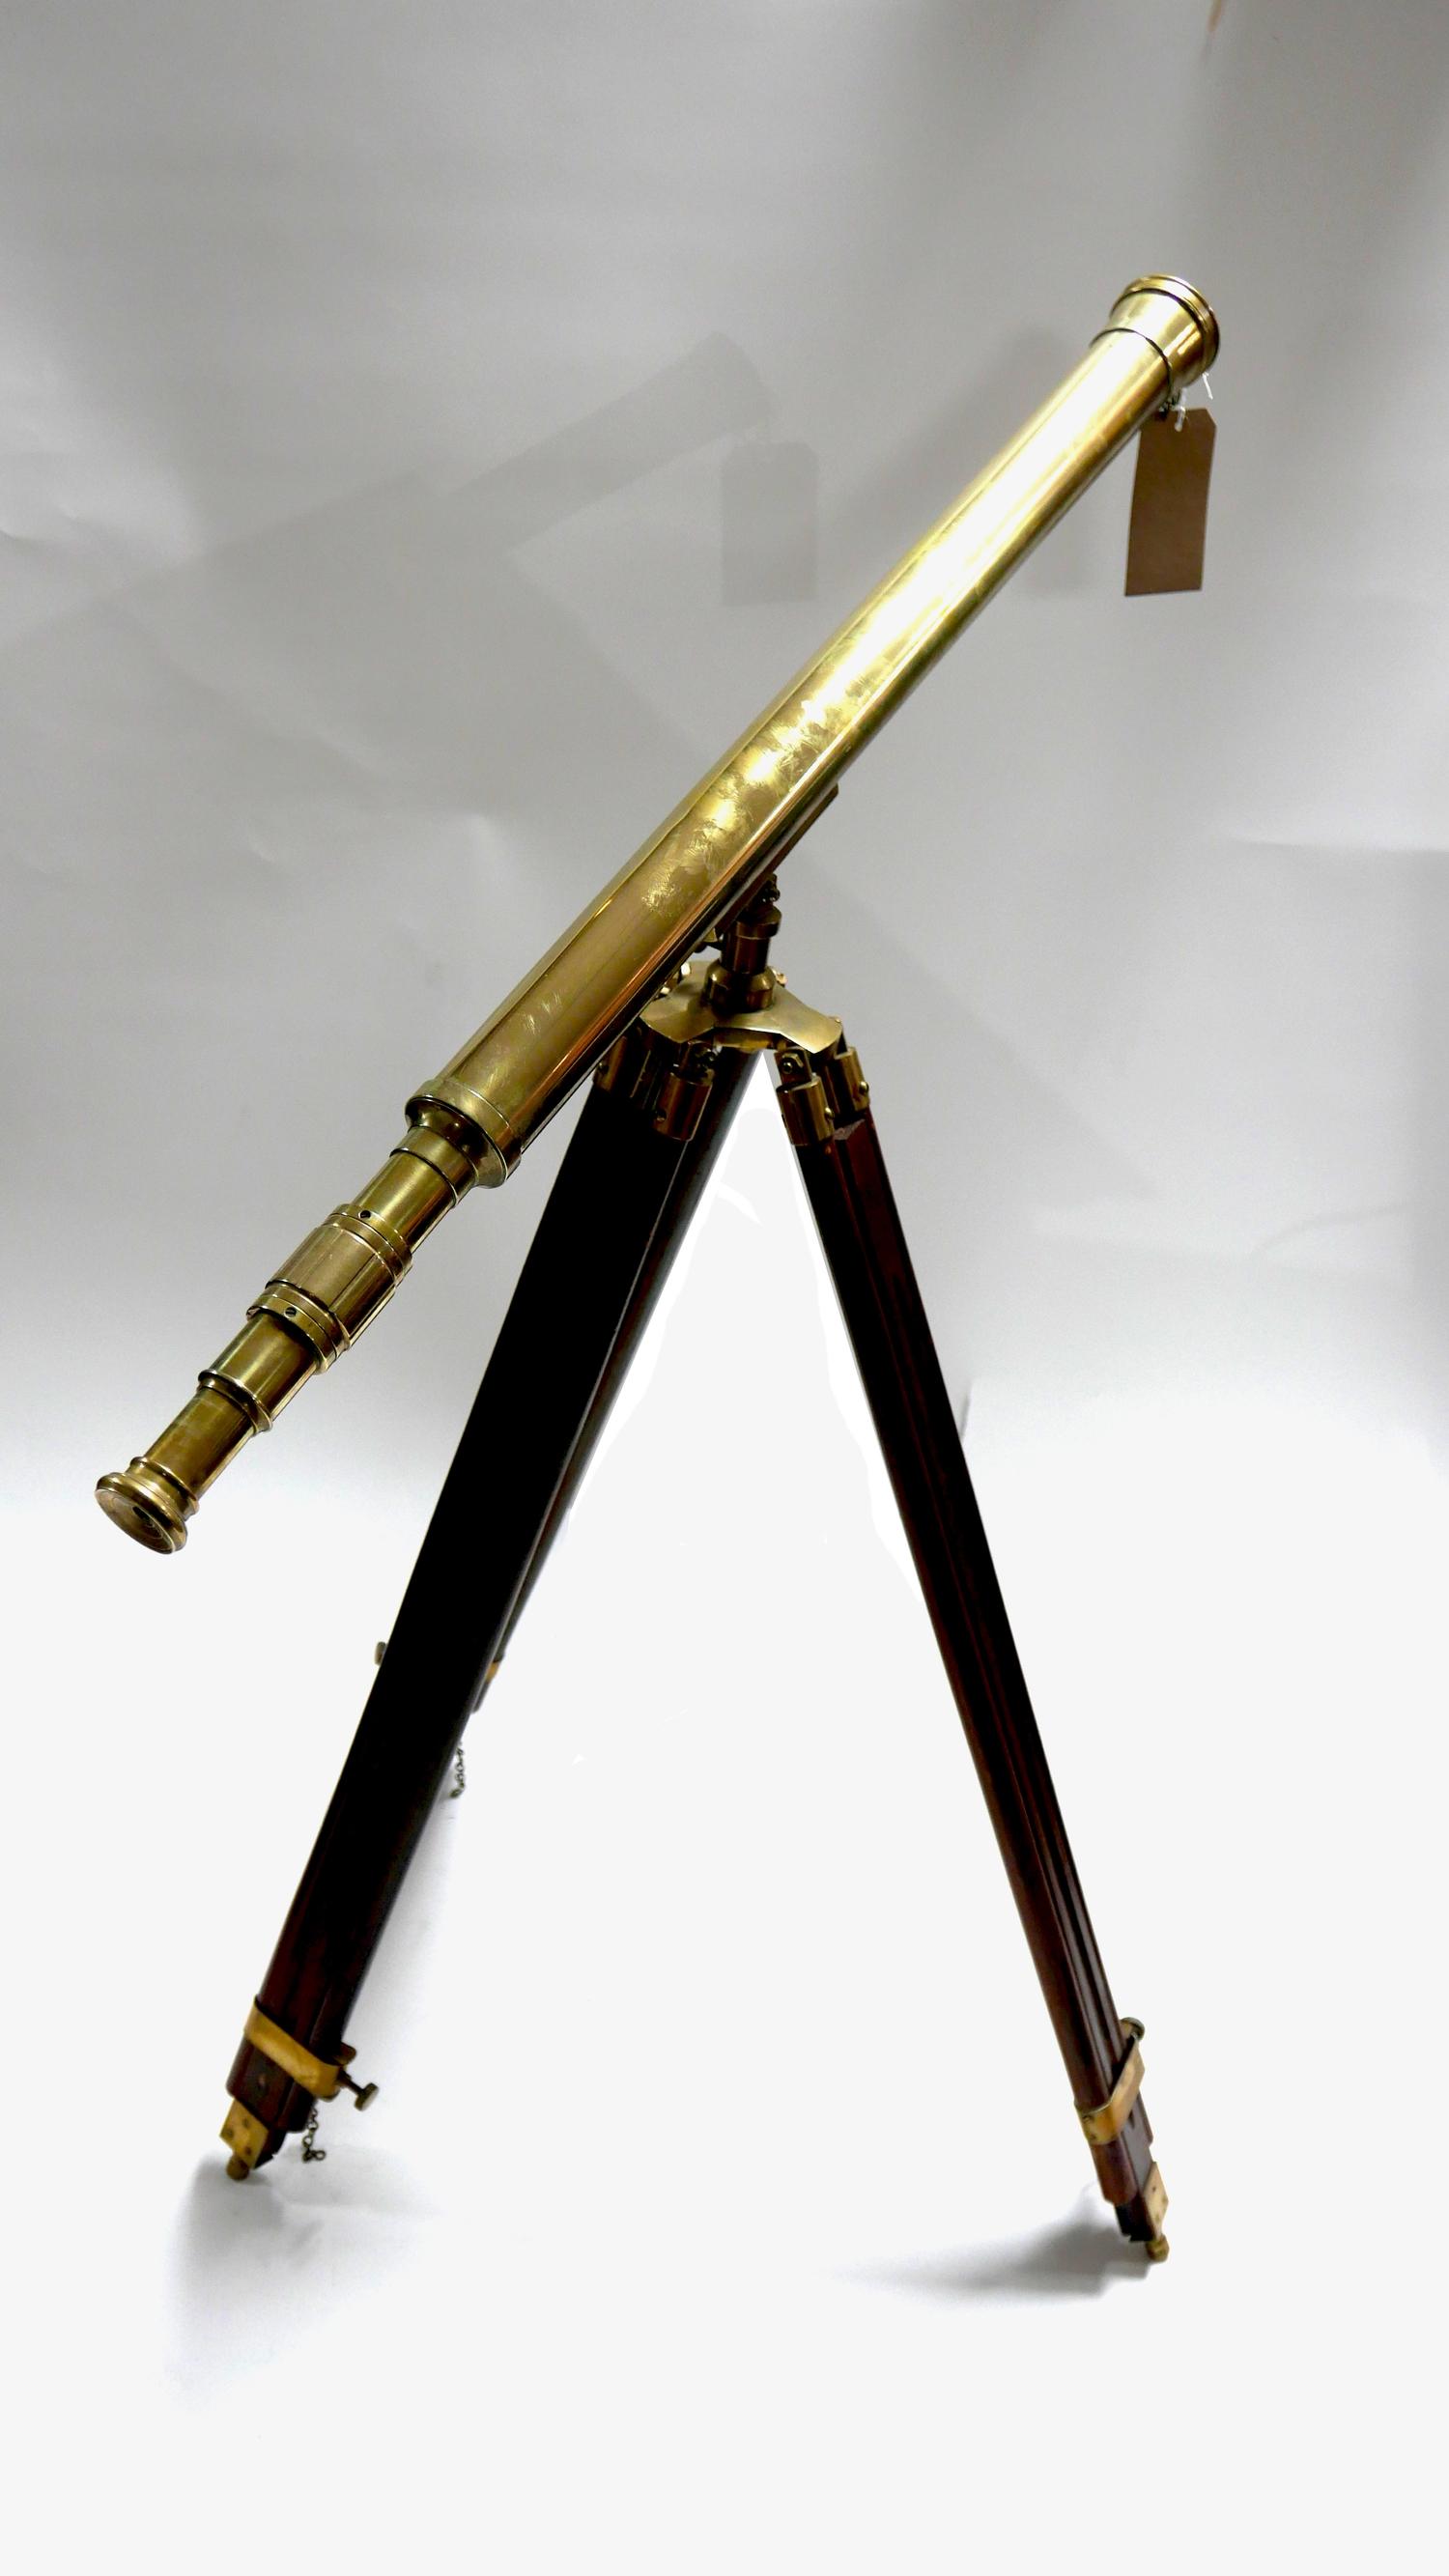 A vintage brass telescope on adjustable mahogany tripod stand